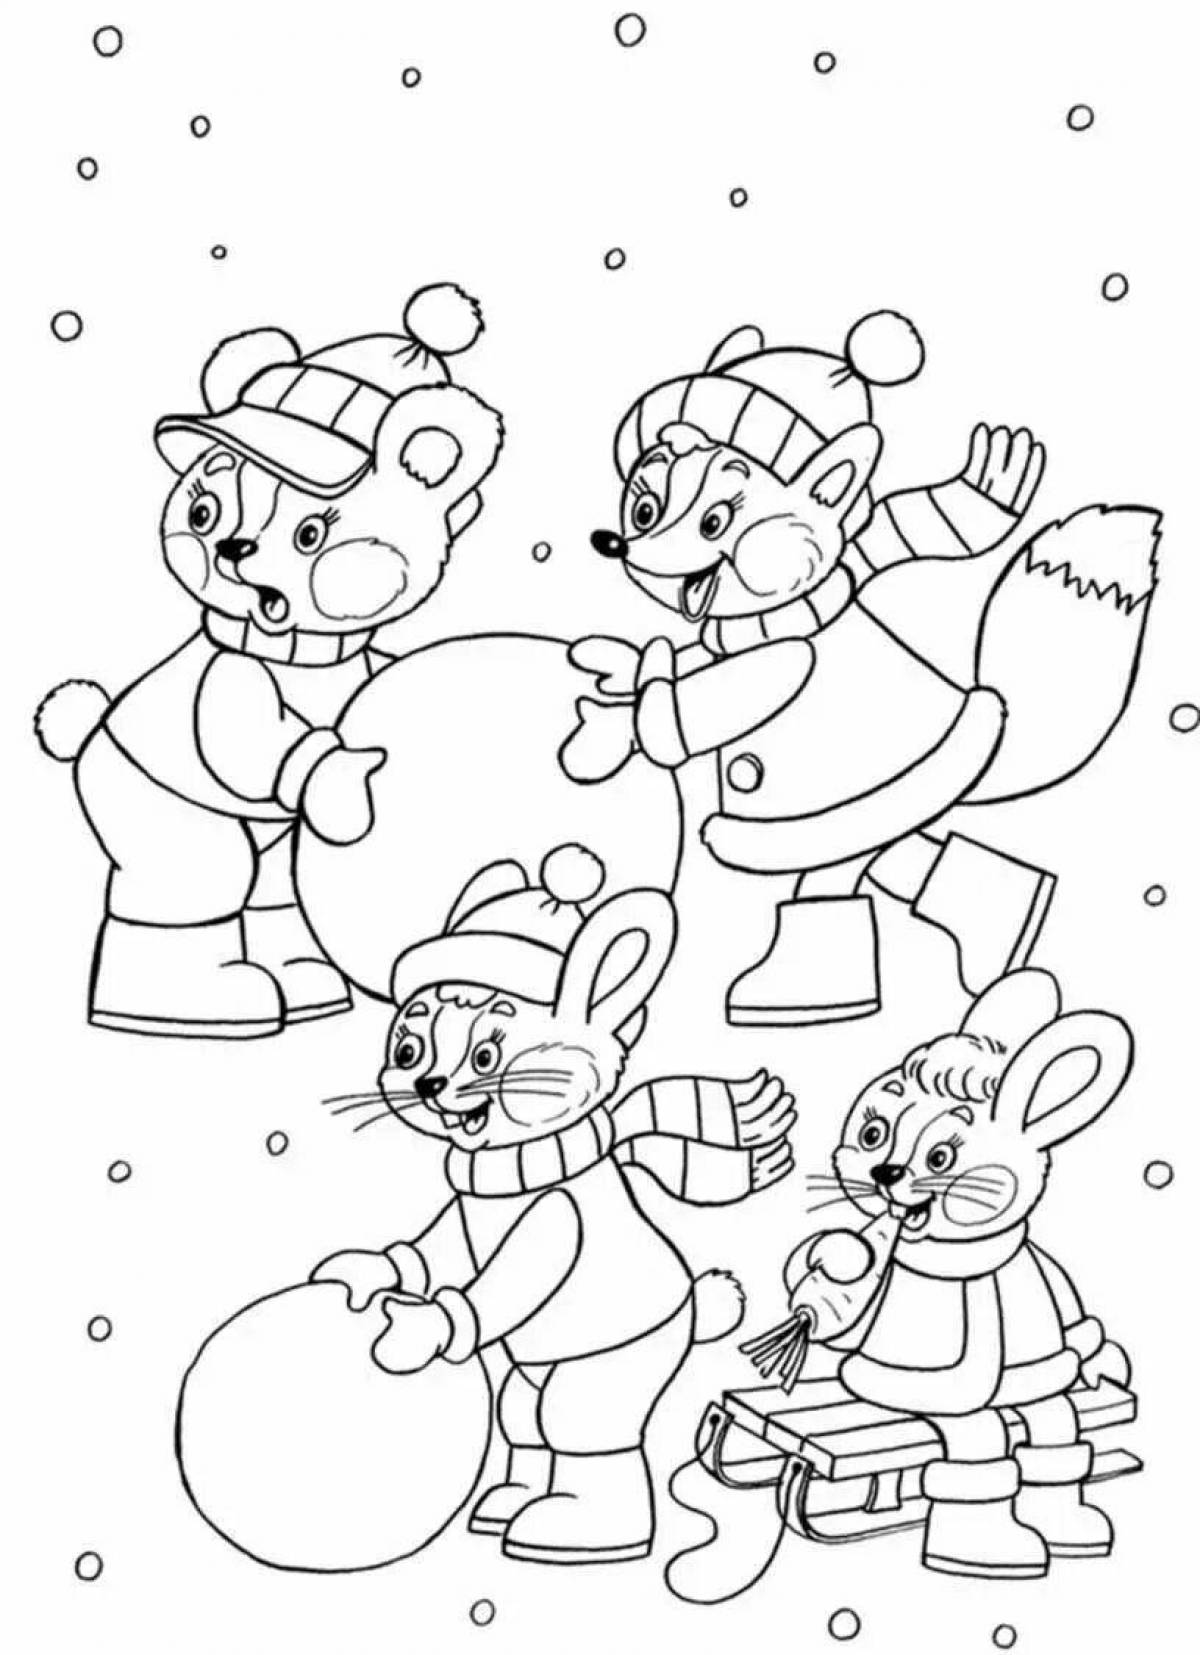 Furry pre-k winter coloring book